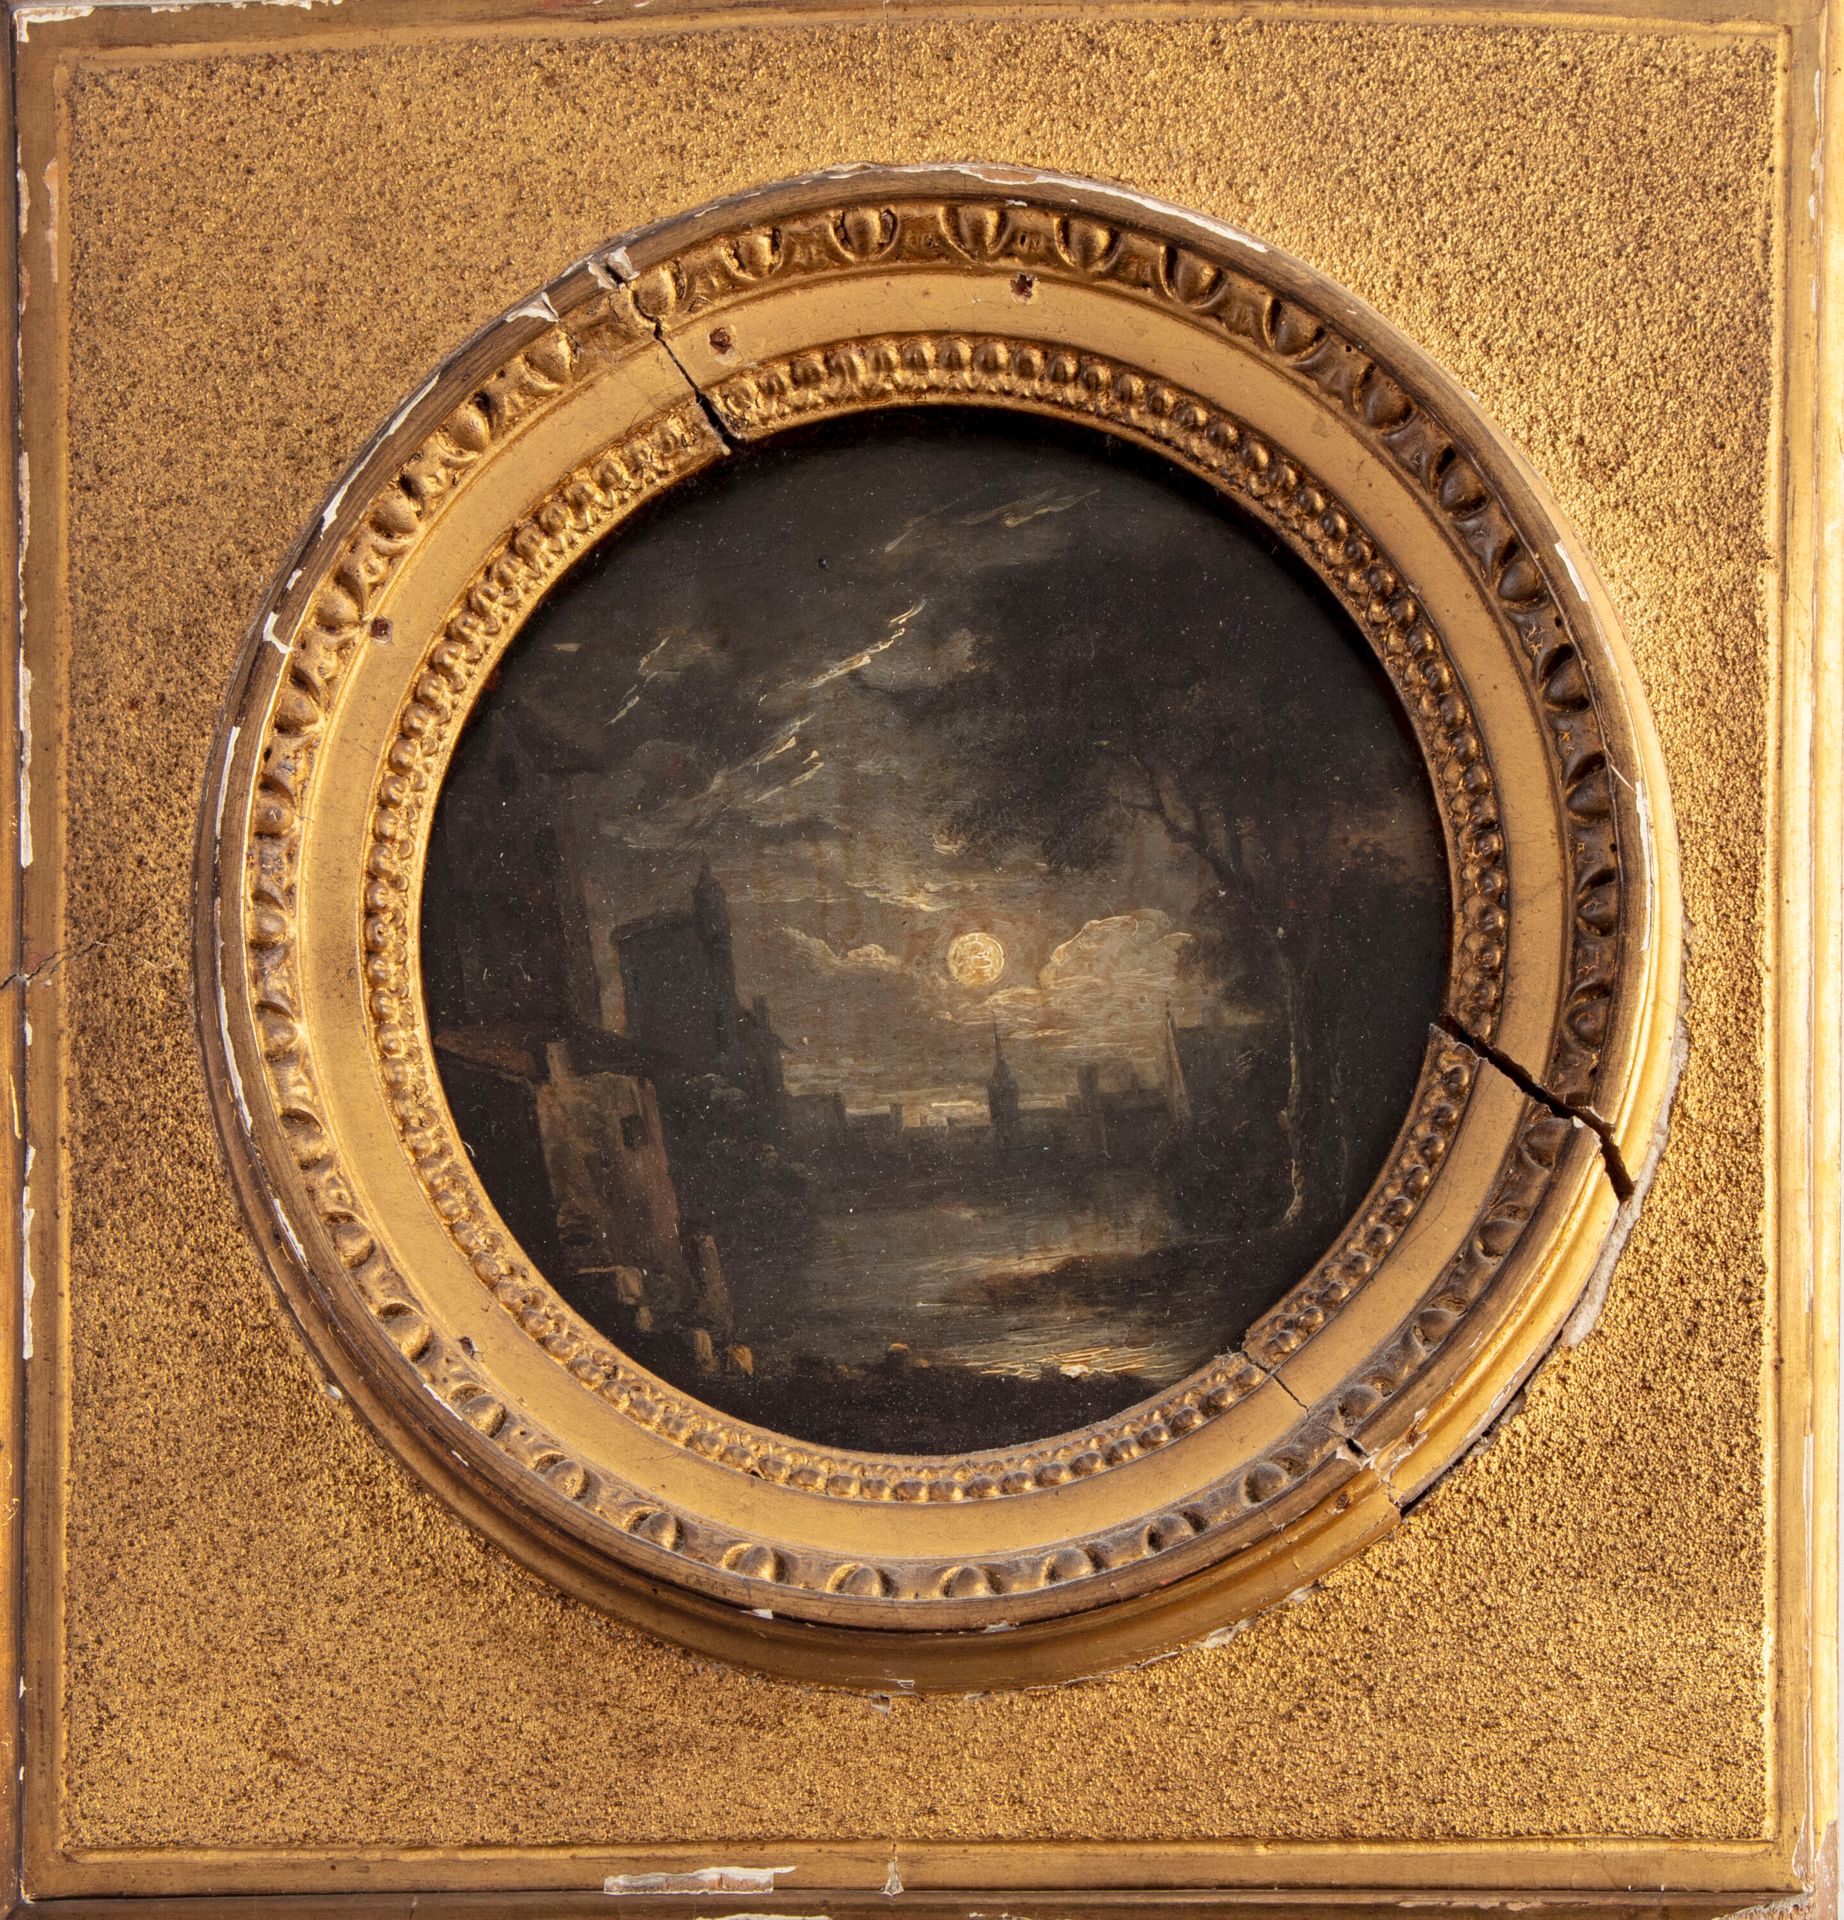 VERNET 19世纪初的法国学校--Joseph VERNET的追随者

月光下的风景

通多

D.12厘米